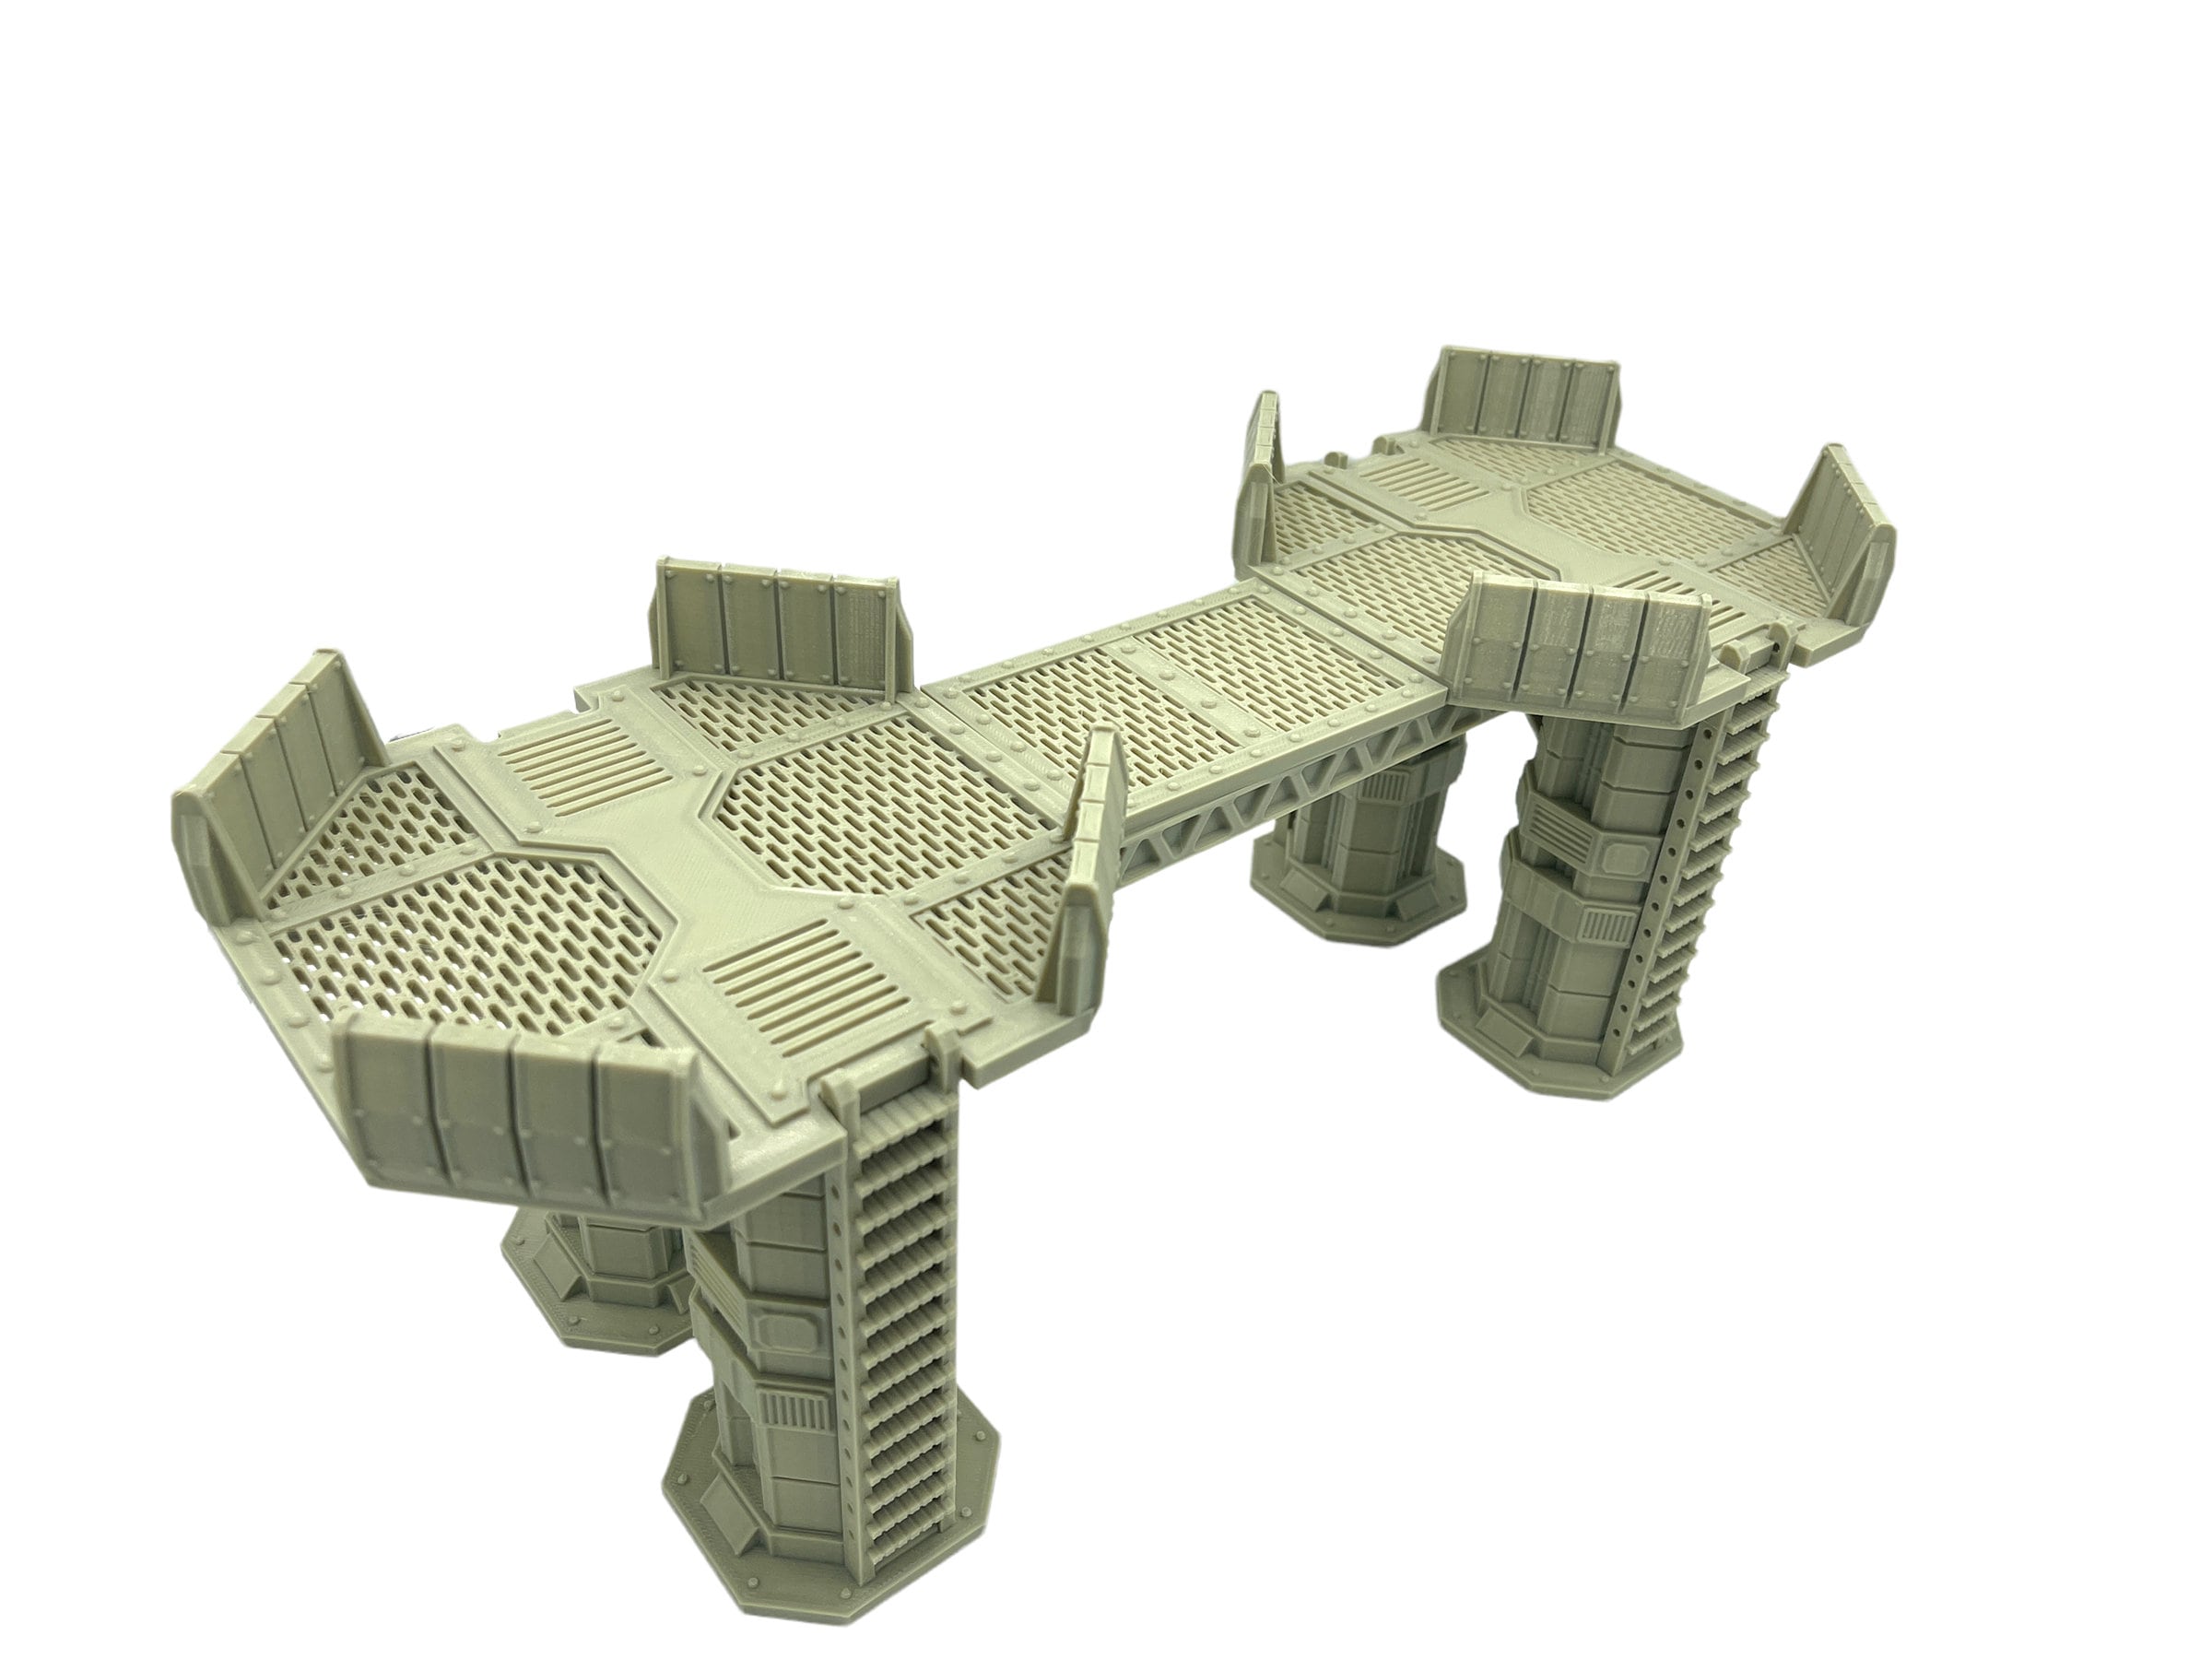 City Dock Platform 2 / Sacrusmundus / RPG and Wargame 3d Printed Tabletop Terrain / Licensed Printer